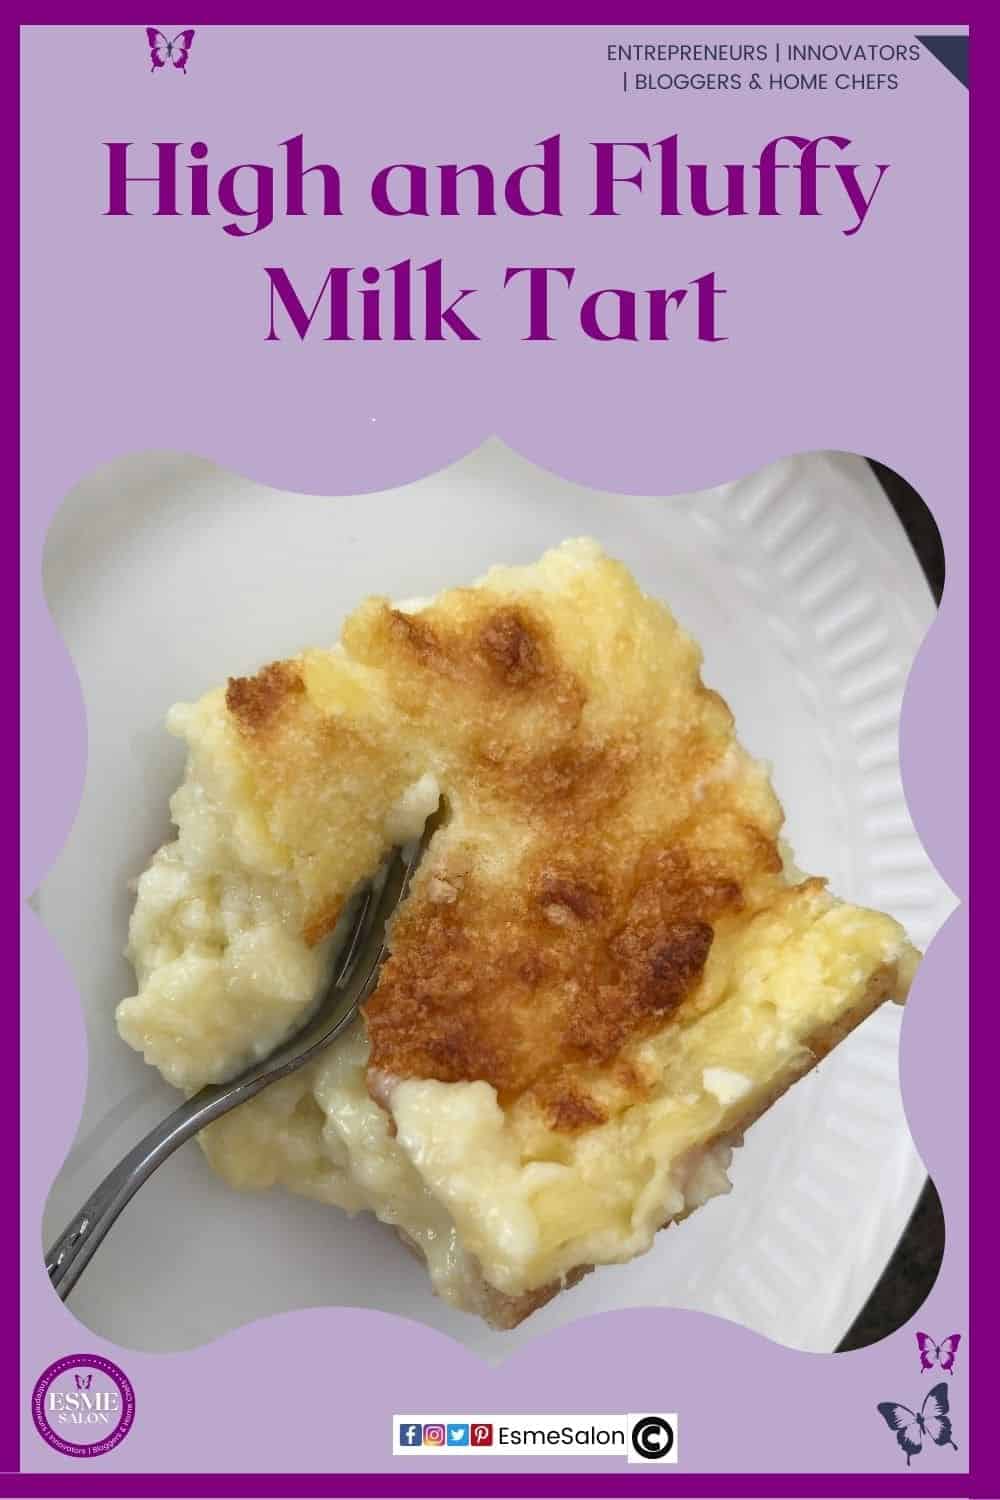 an image of a Baked Milktart plated